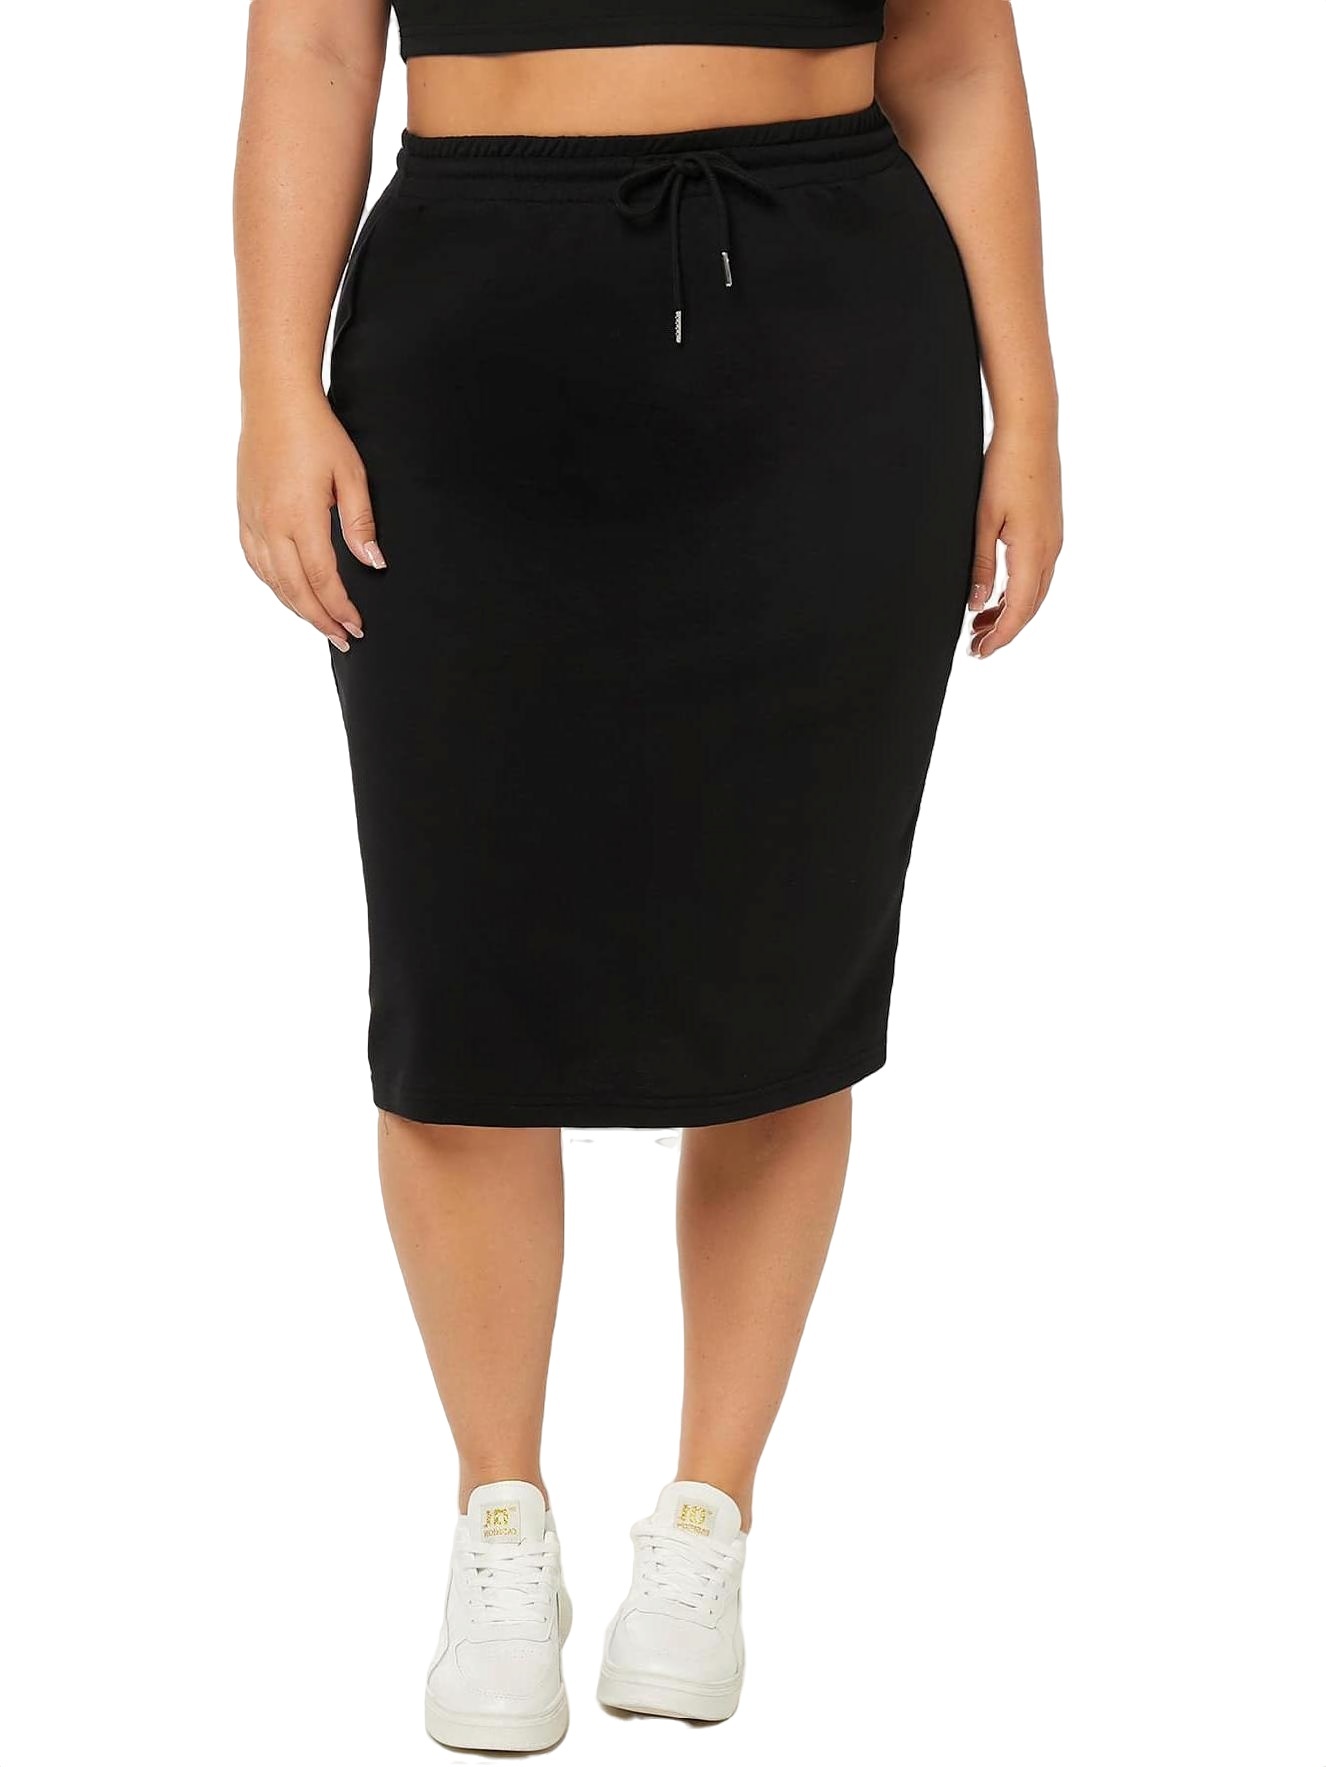 Women's Casual Plain Skirts Plus Size Skirts Pencil Black 2XL - Walmart.com